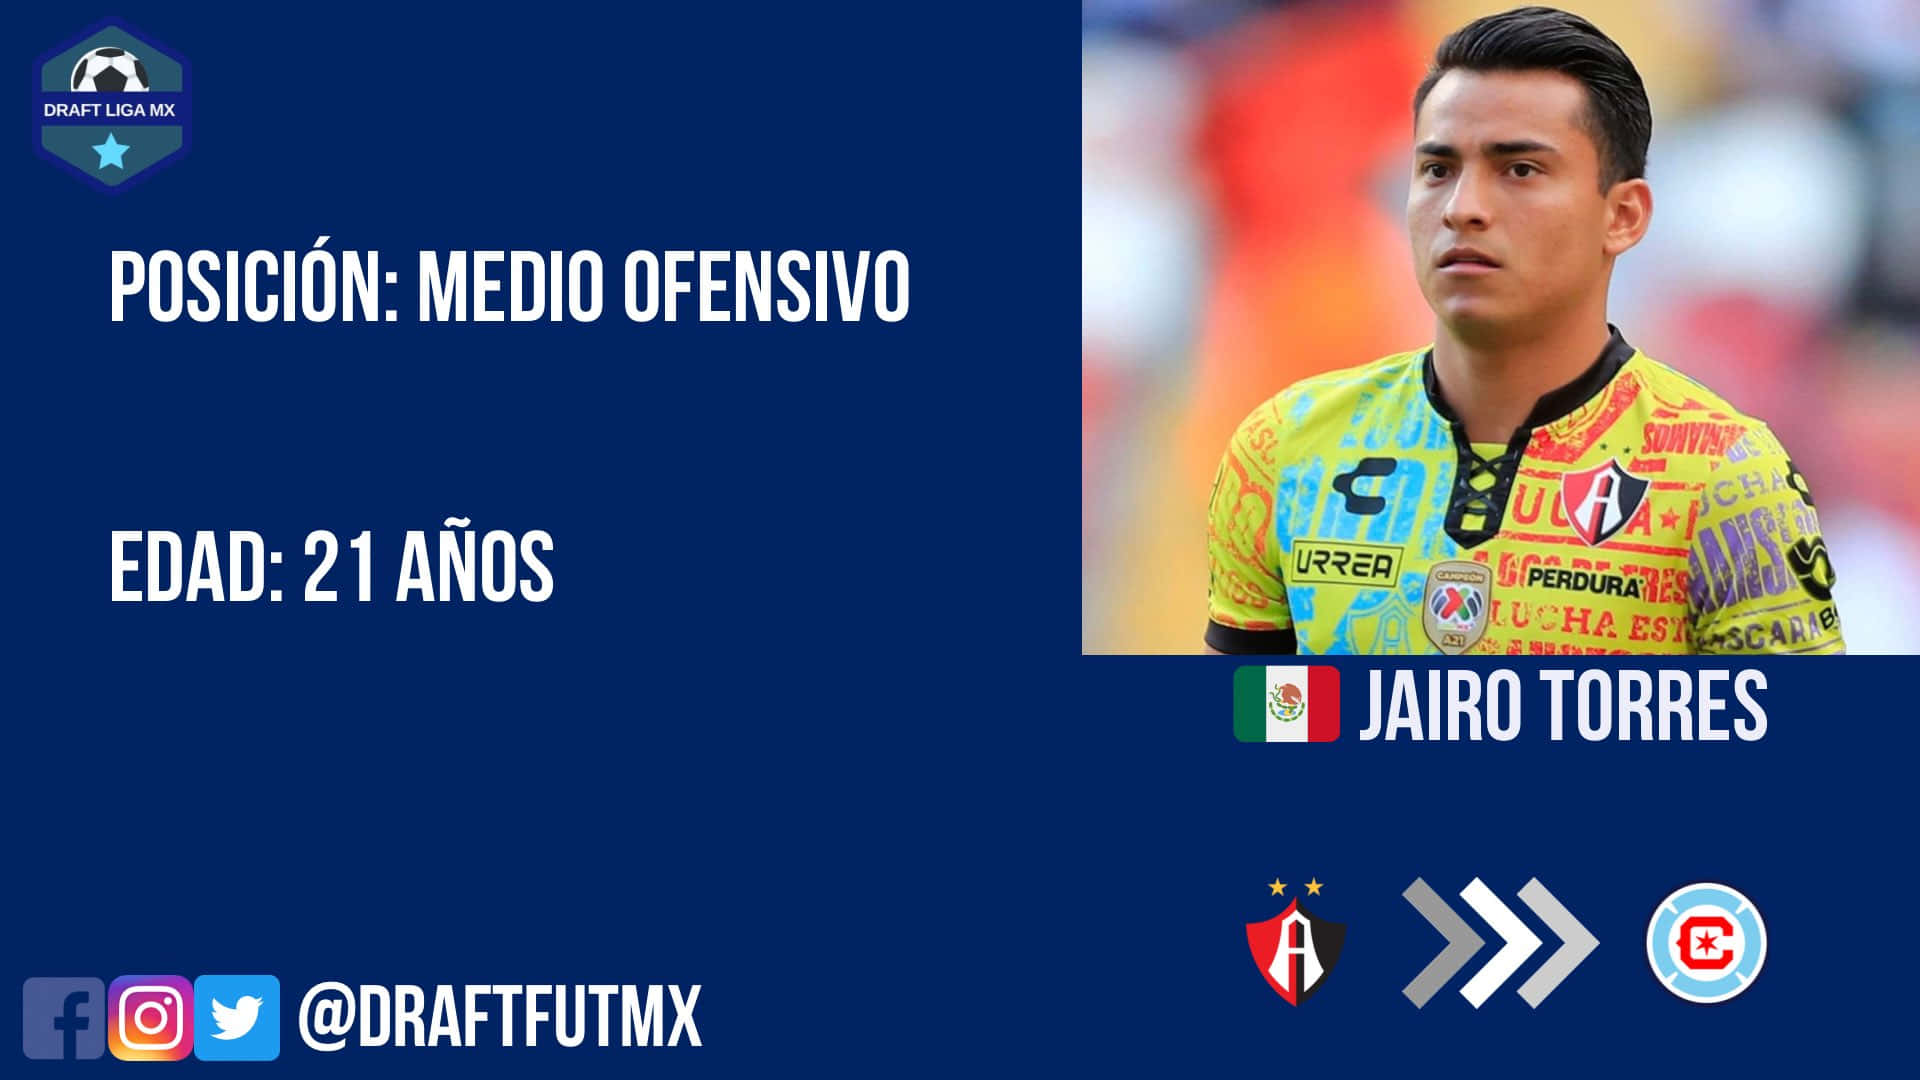 Jairo Torres Draft Liga MX-plakat Wallpaper